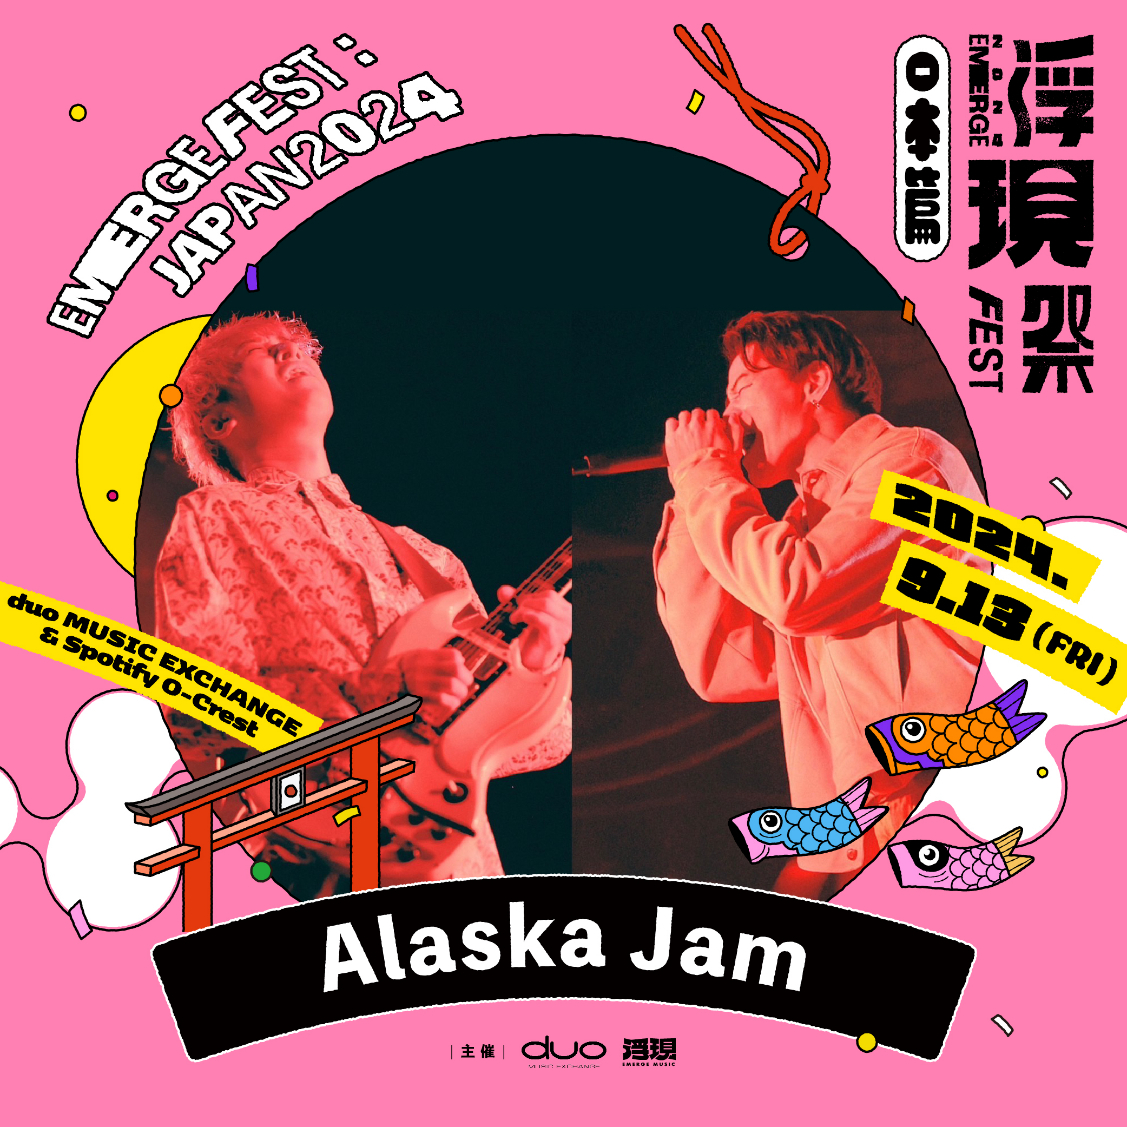 Alaska Jam